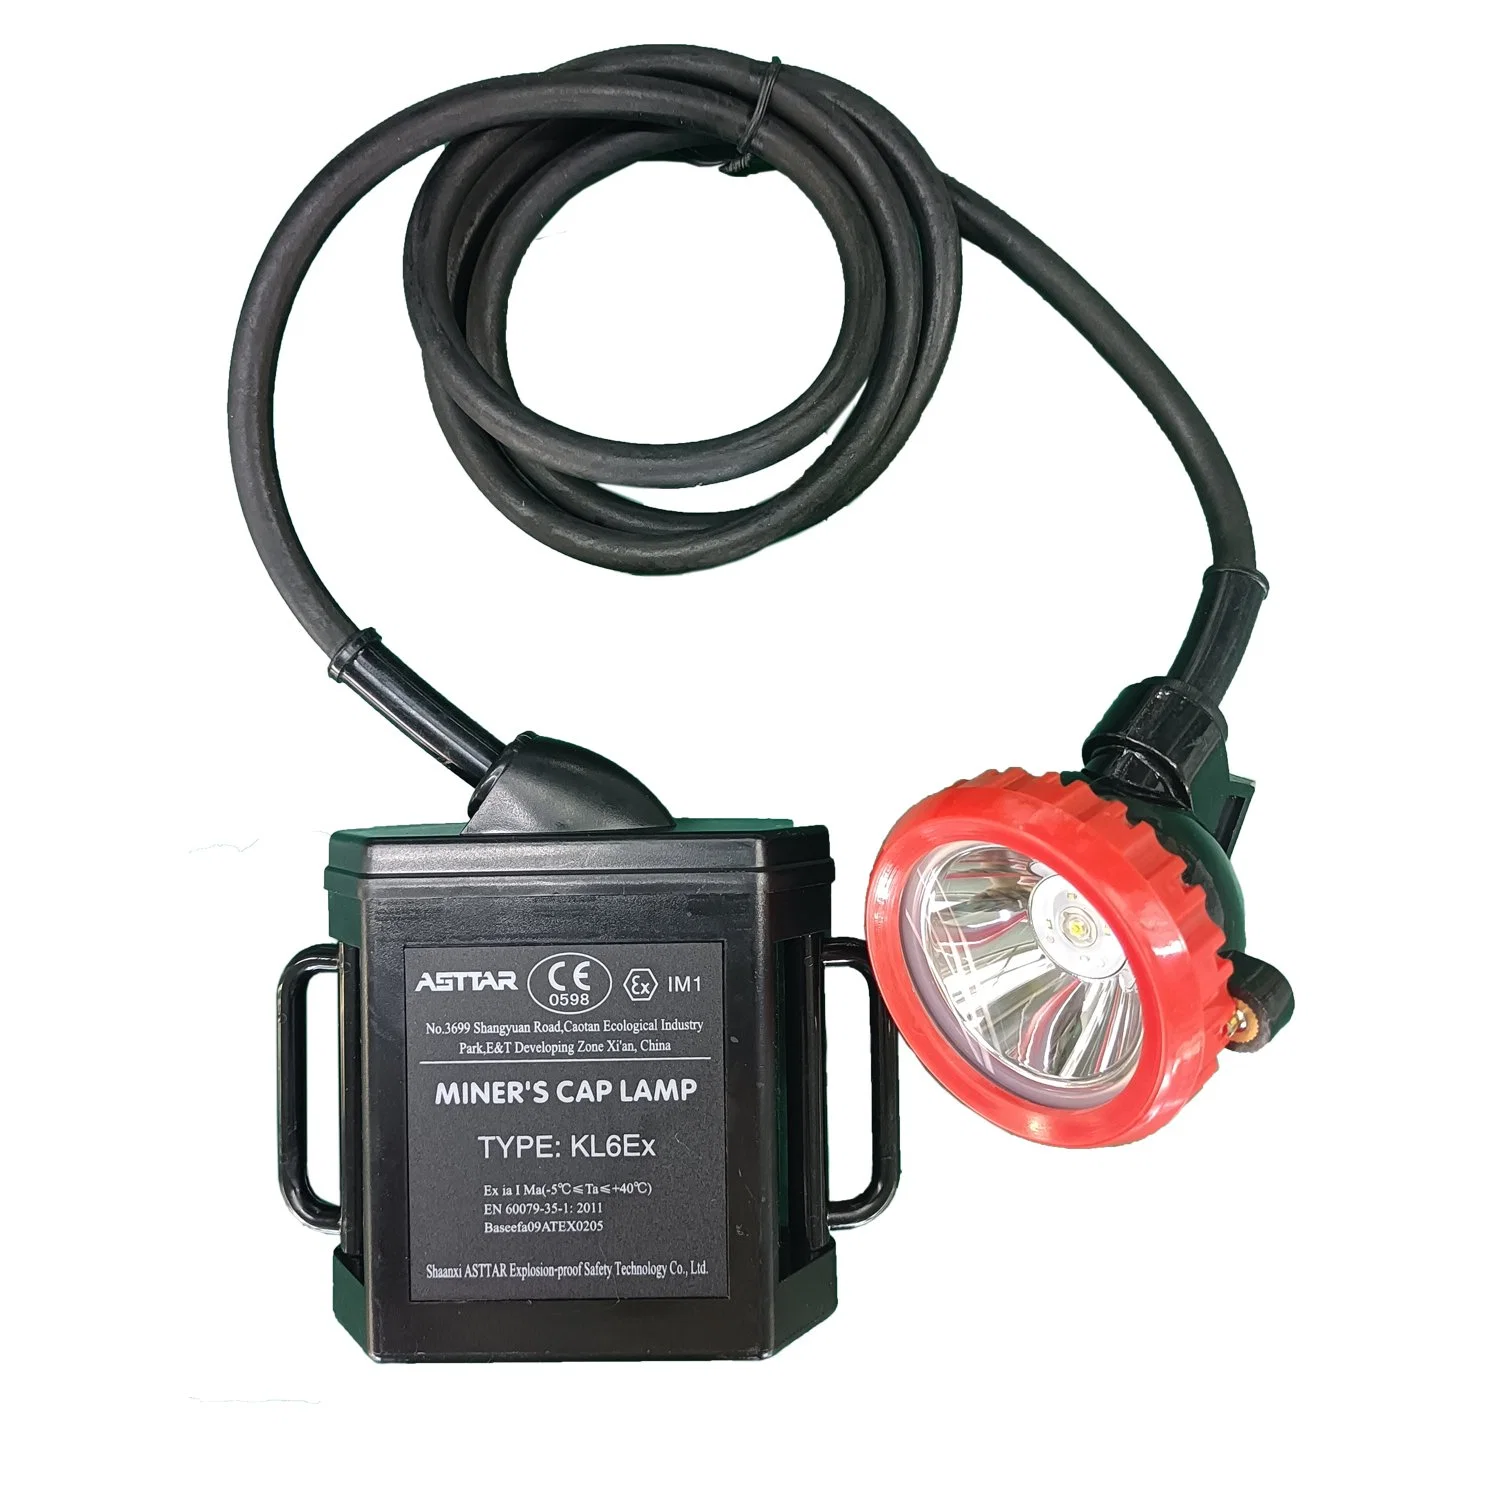 Atex Certified Asttar LED Headlight, Mining Lamp, Miner's LED Cap Lamp